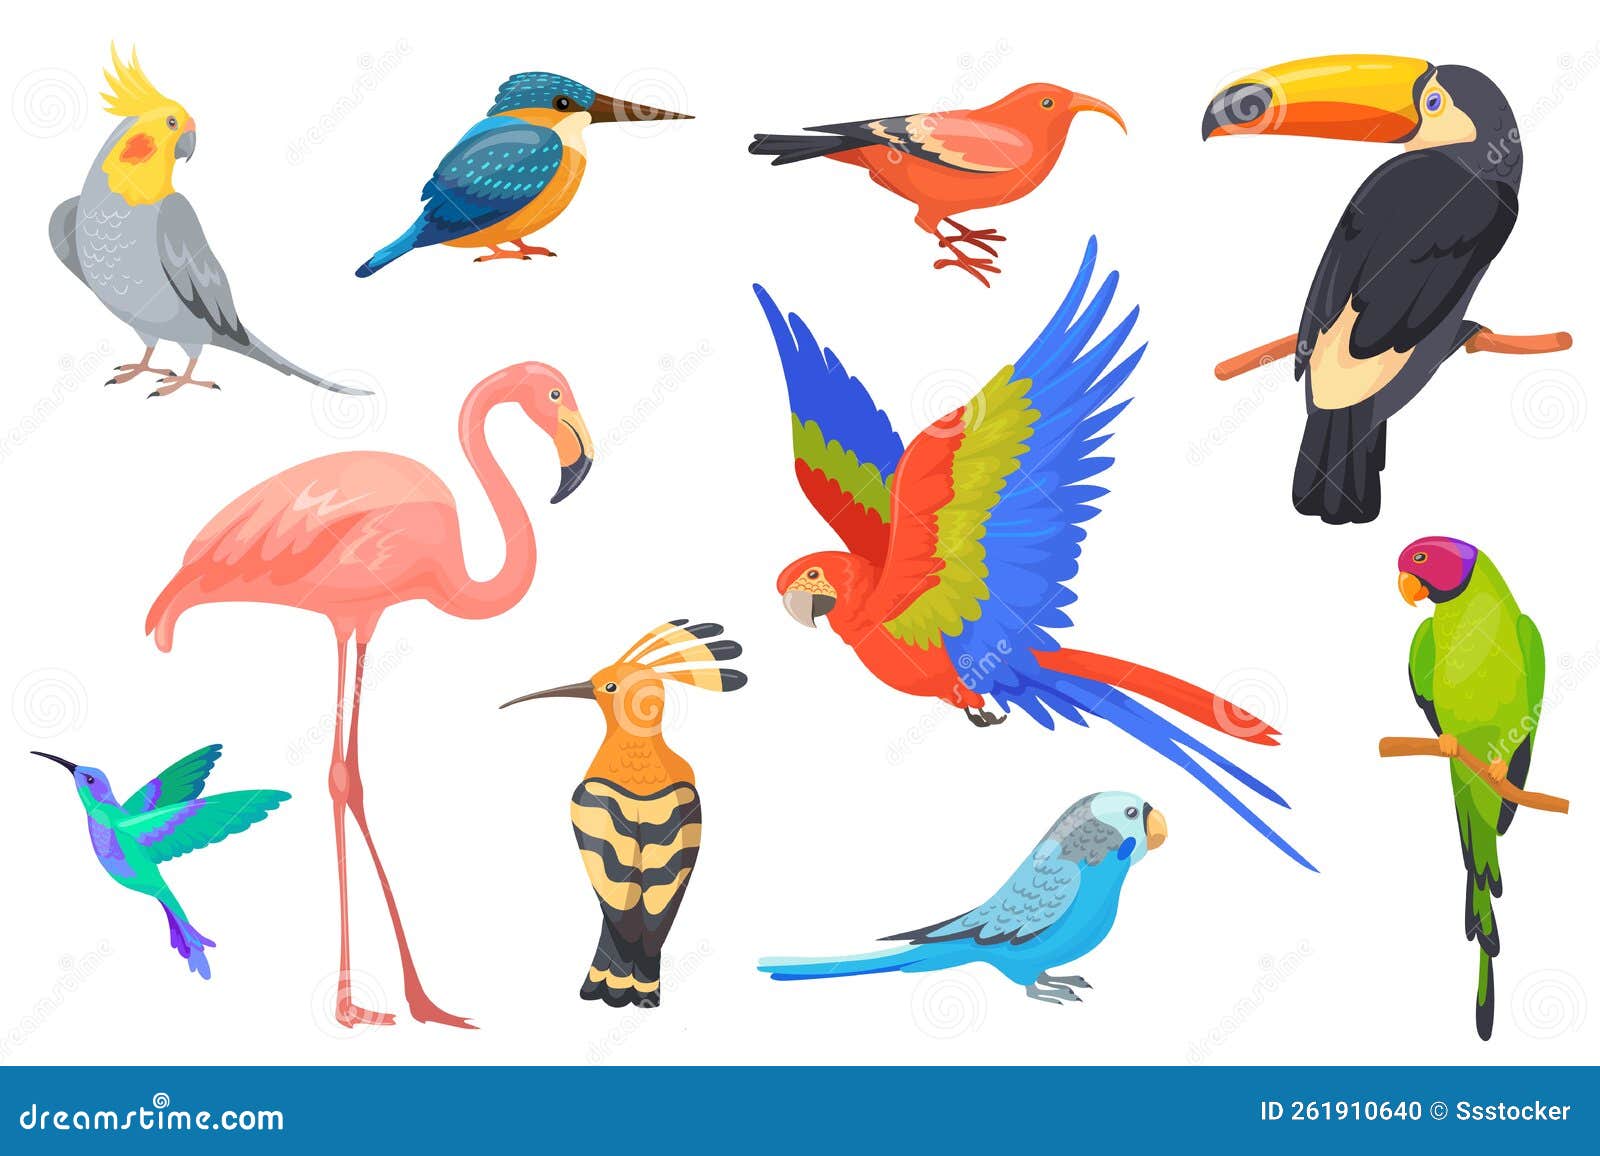 https://thumbs.dreamstime.com/z/wildlife-hawaiian-birds-exotic-beauty-bird-tropical-paradise-jungle-brazil-colombia-macaw-parakeet-toucan-hummingbird-261910640.jpg